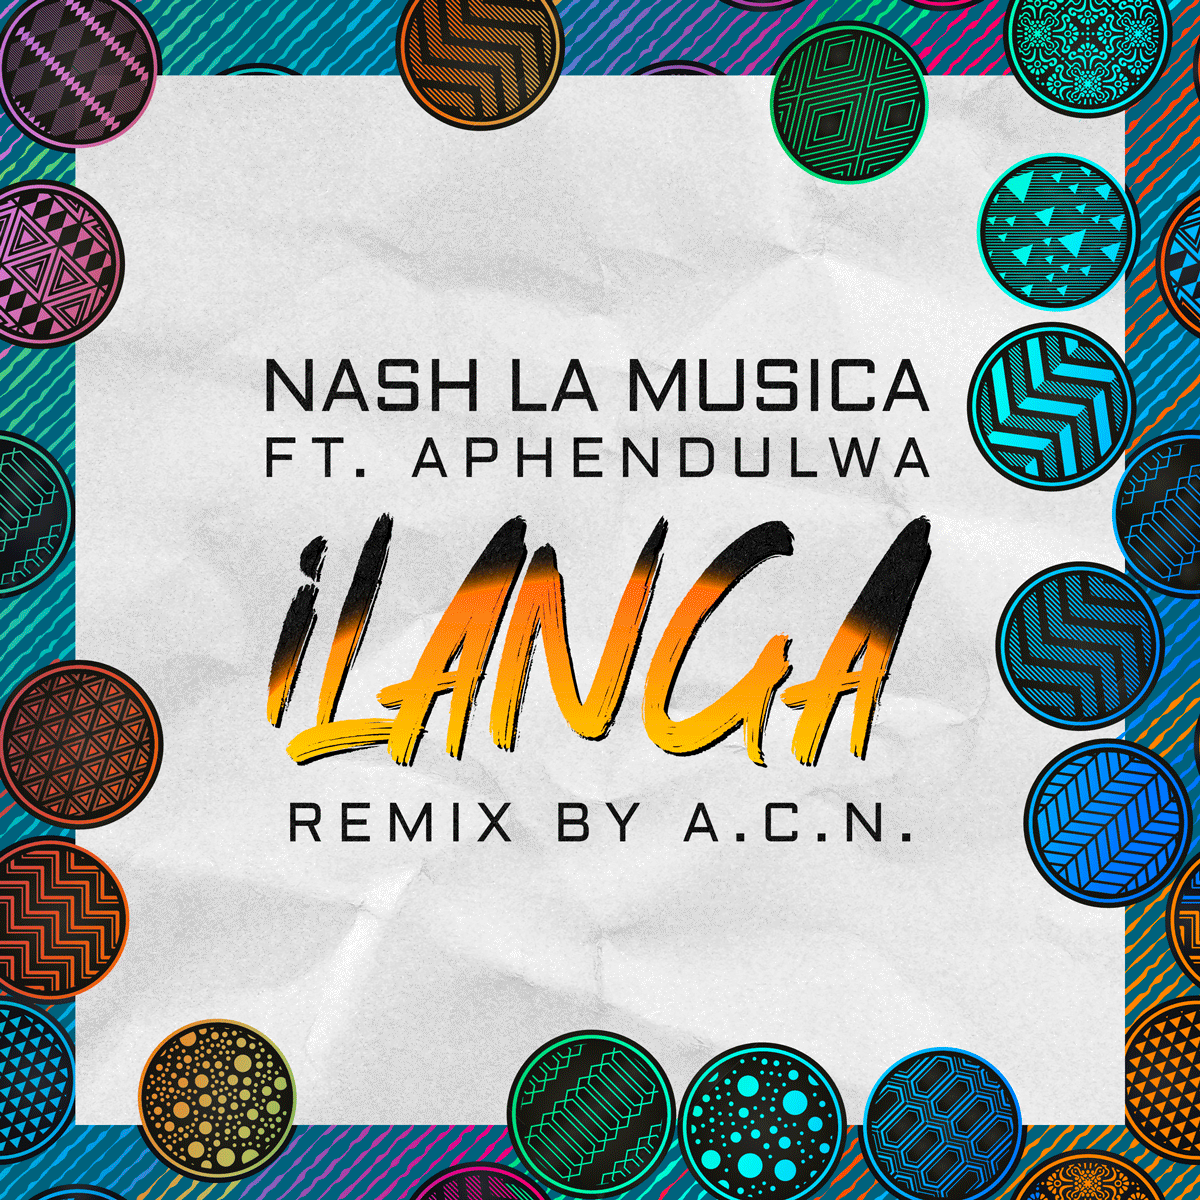 izzit Records presents A.C.N.'s remix of "iLanga", by Nash La Musica & Aphendulwa